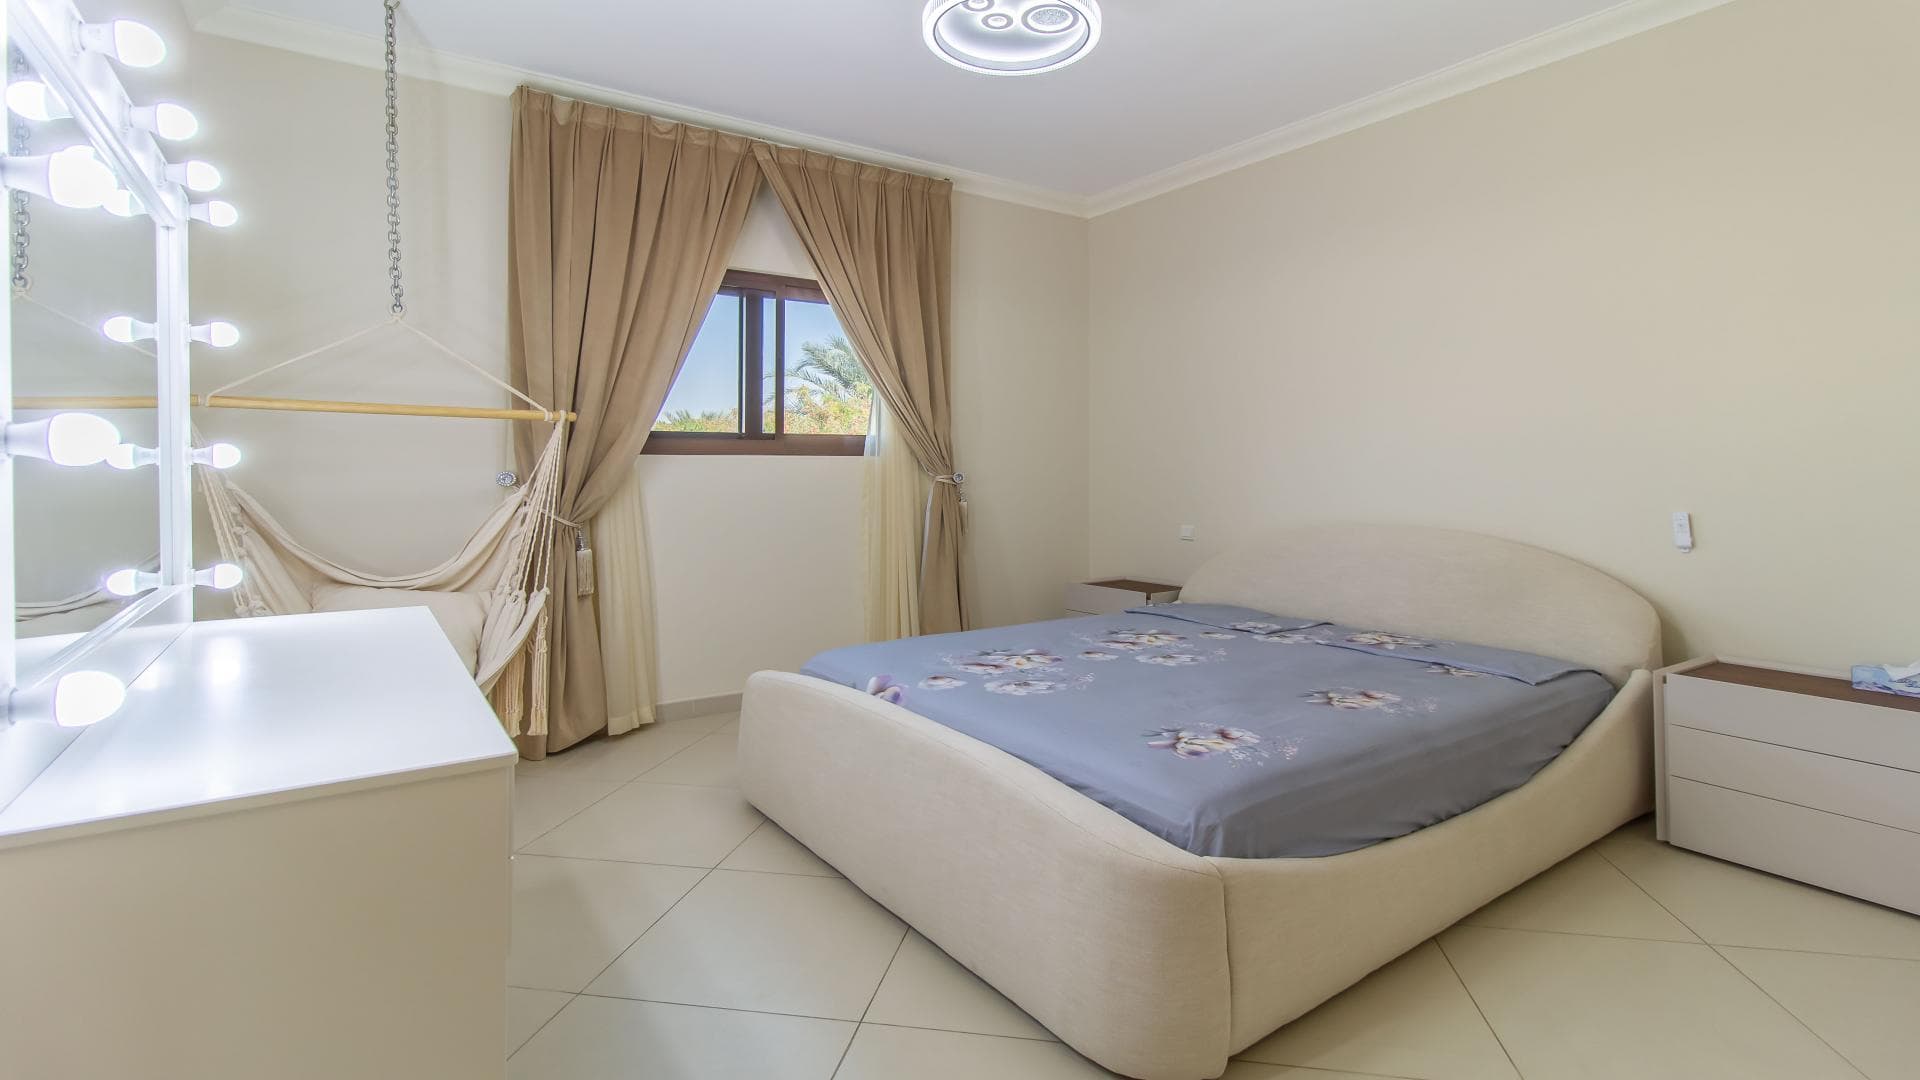 5 Bedroom Villa For Rent Al Bateen Residence Lp27831 1d4e07374b1d1100.jpg